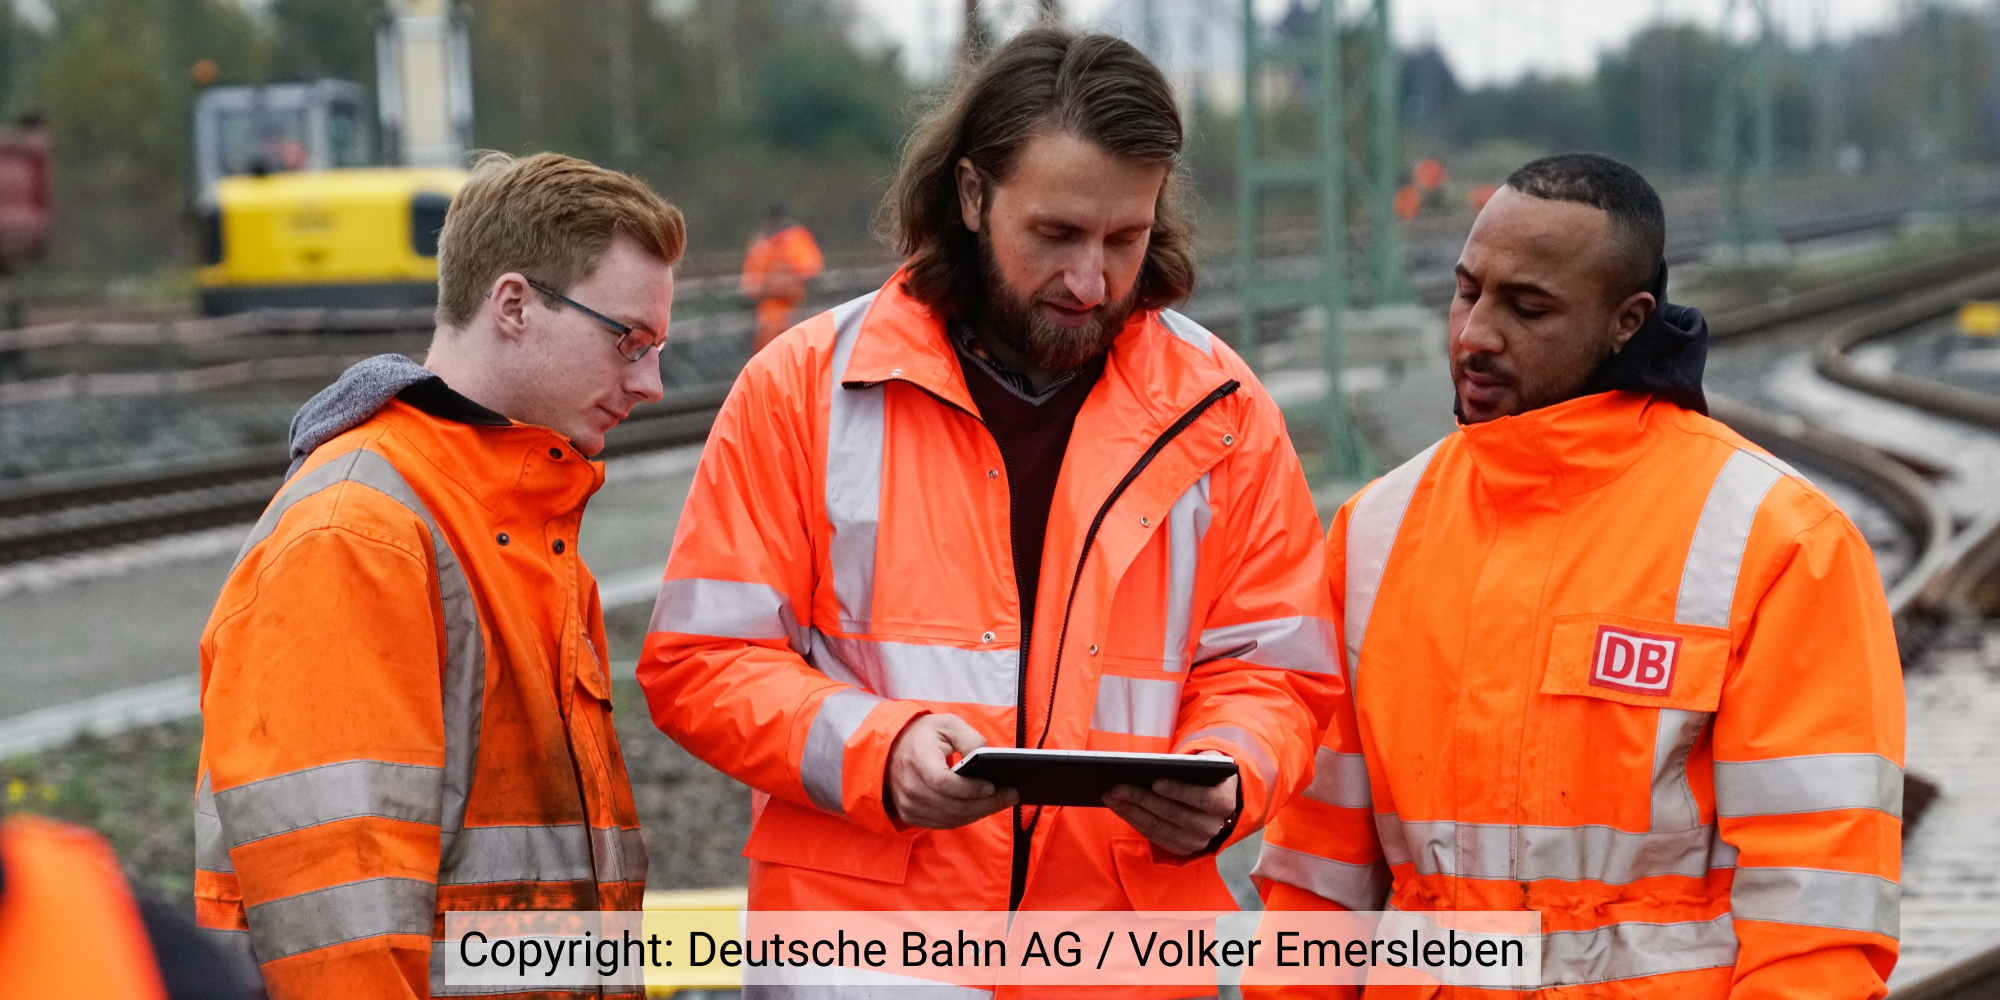 Copyright: Deutsche Bahn AG / Volker Emersleben